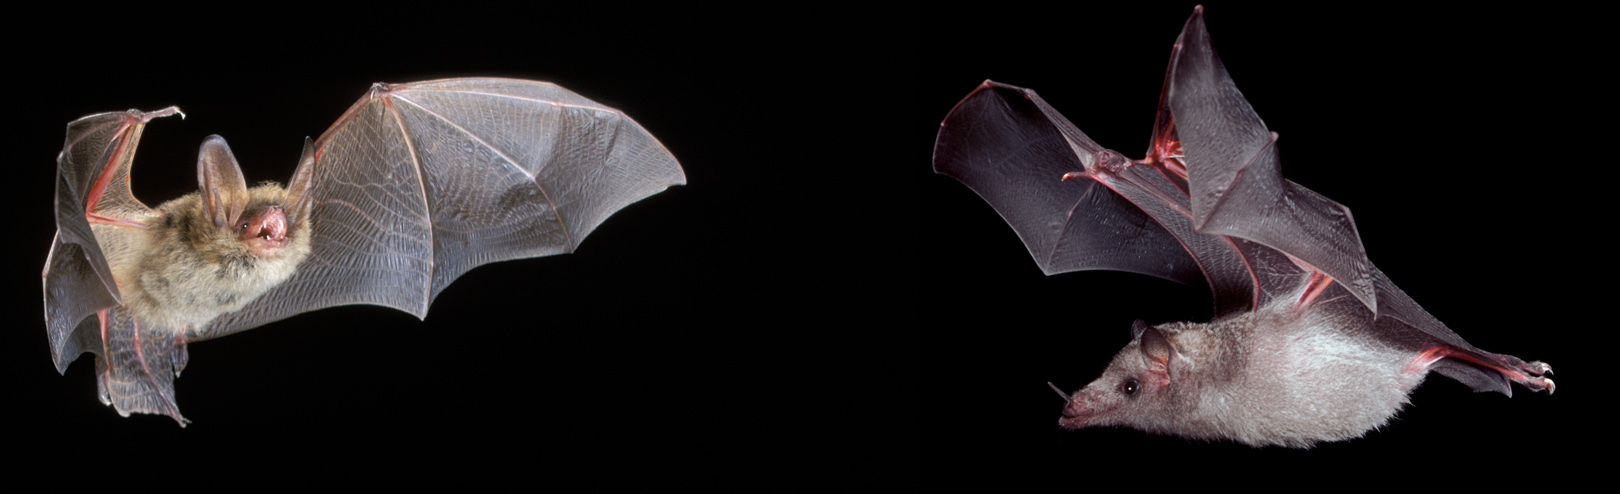 A southwestern myotis bat and a Mexican long-tongued bat